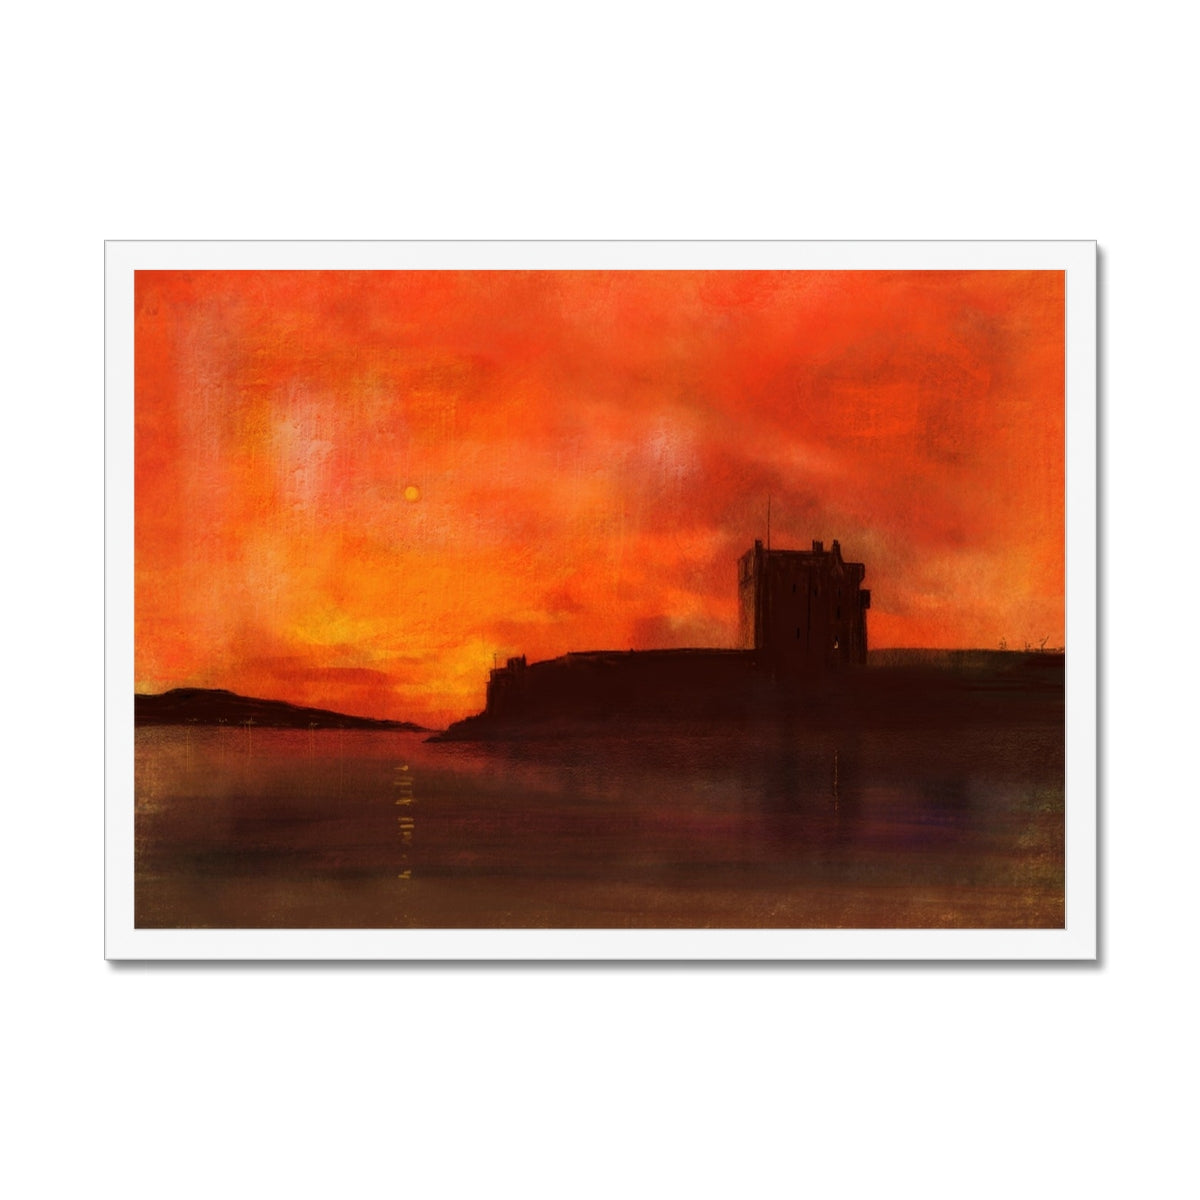 Broughty Castle Sunset Painting | Framed Prints From Scotland-Framed Prints-Scottish Castles Art Gallery-A2 Landscape-White Frame-Paintings, Prints, Homeware, Art Gifts From Scotland By Scottish Artist Kevin Hunter